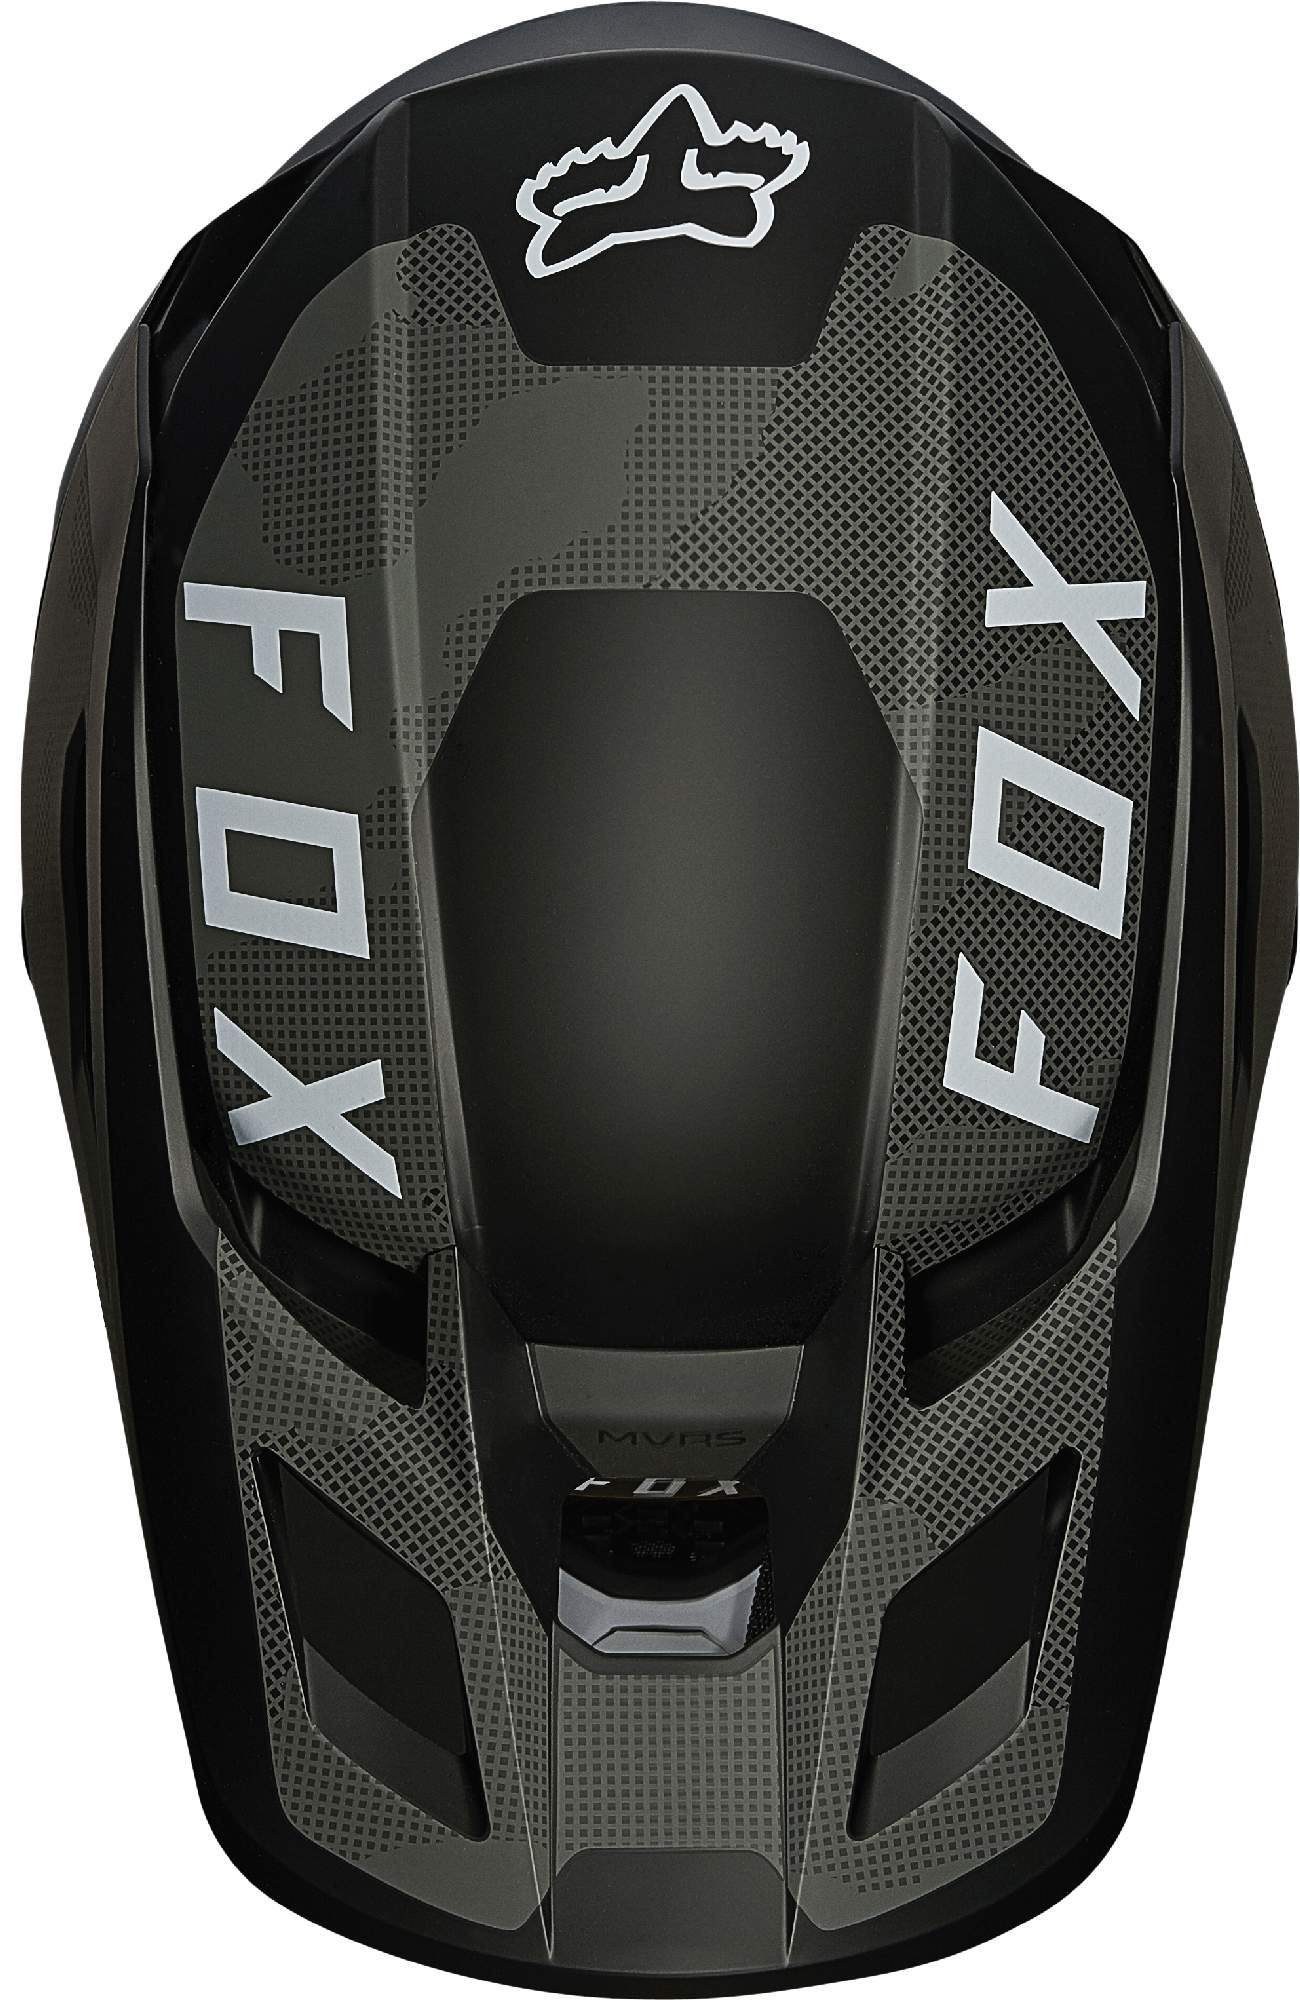 Fox Racing Adult Black/Grey V2 Speyer Dirt Bike Helmet MX ATV SxS UTV ...